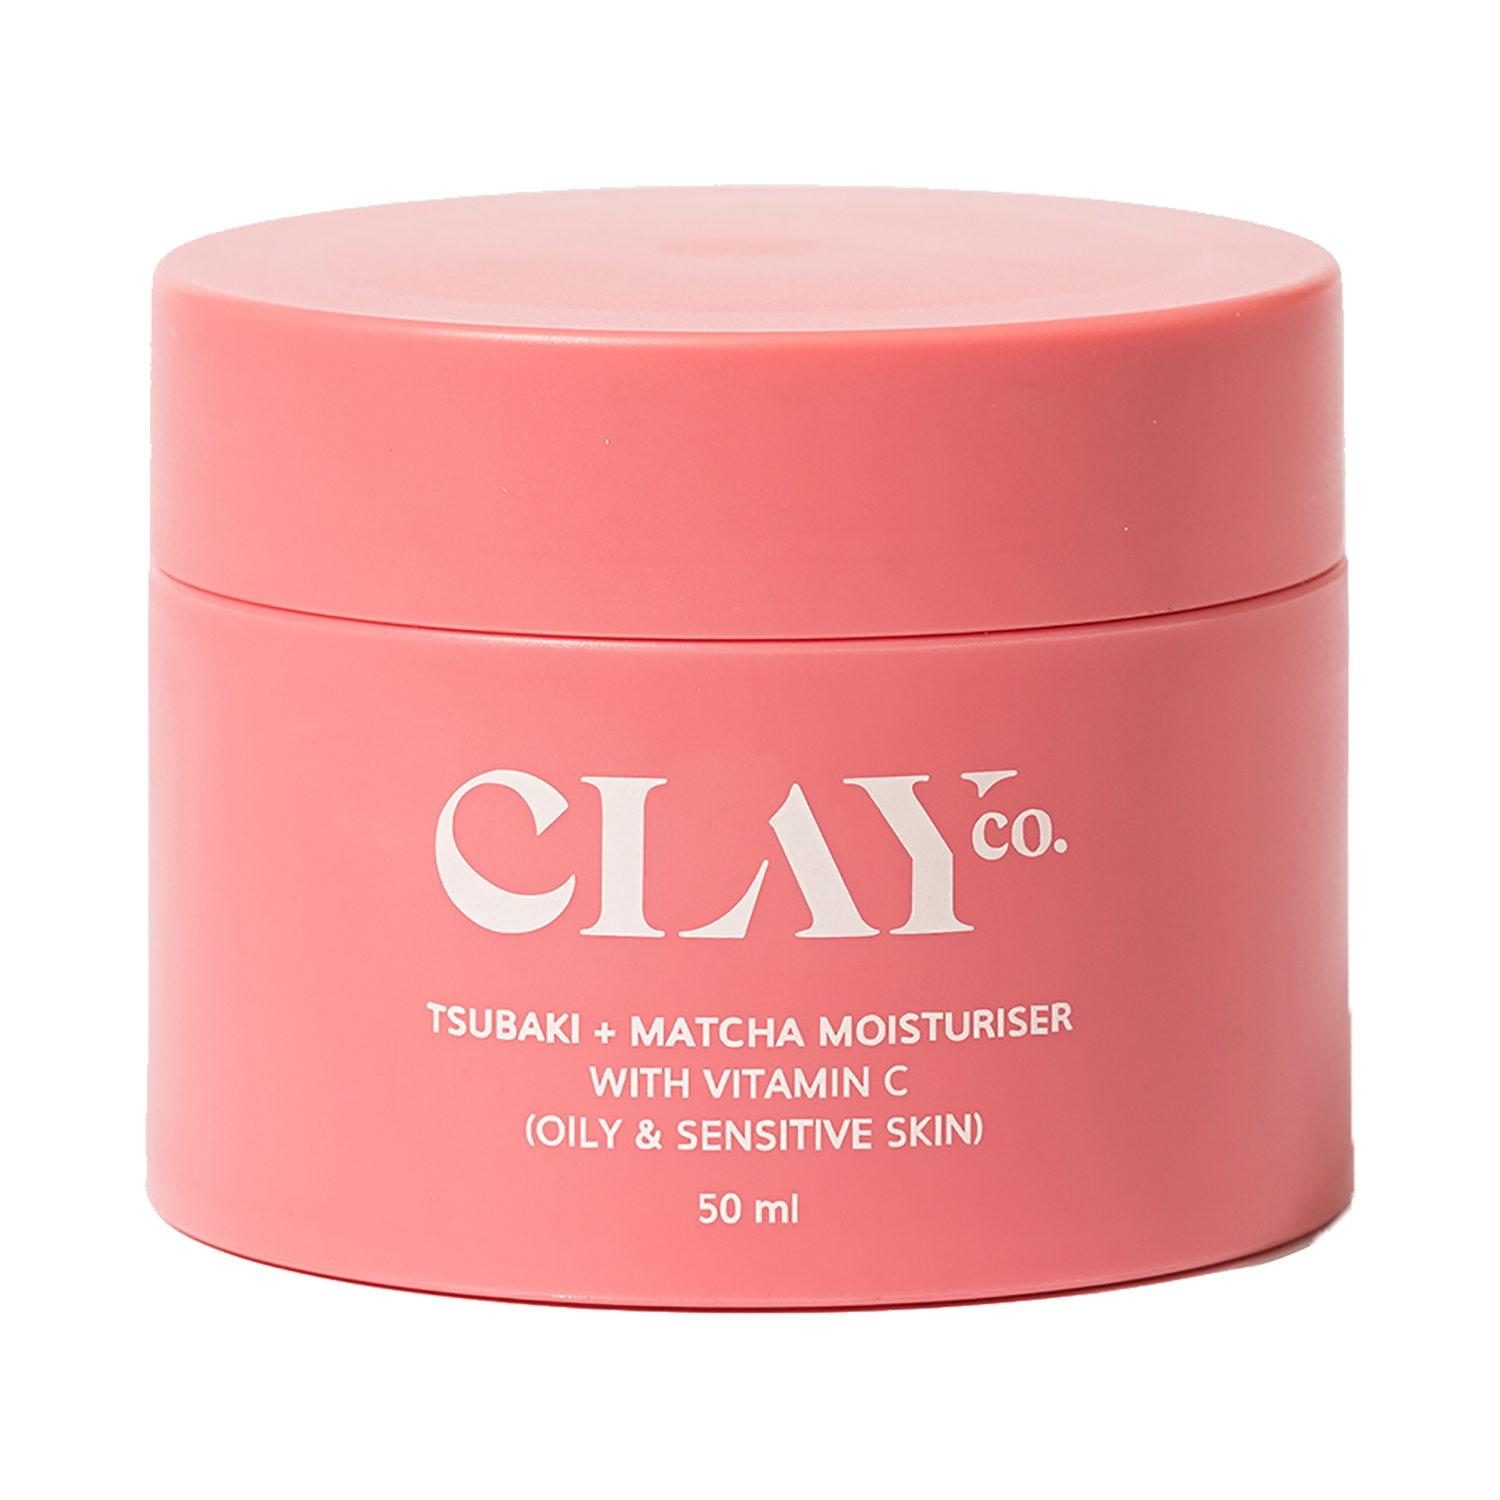 ClayCo | ClayCo Tsubaki + Matcha Moisturiser with Vitamin C For Oily Skin (50ml)